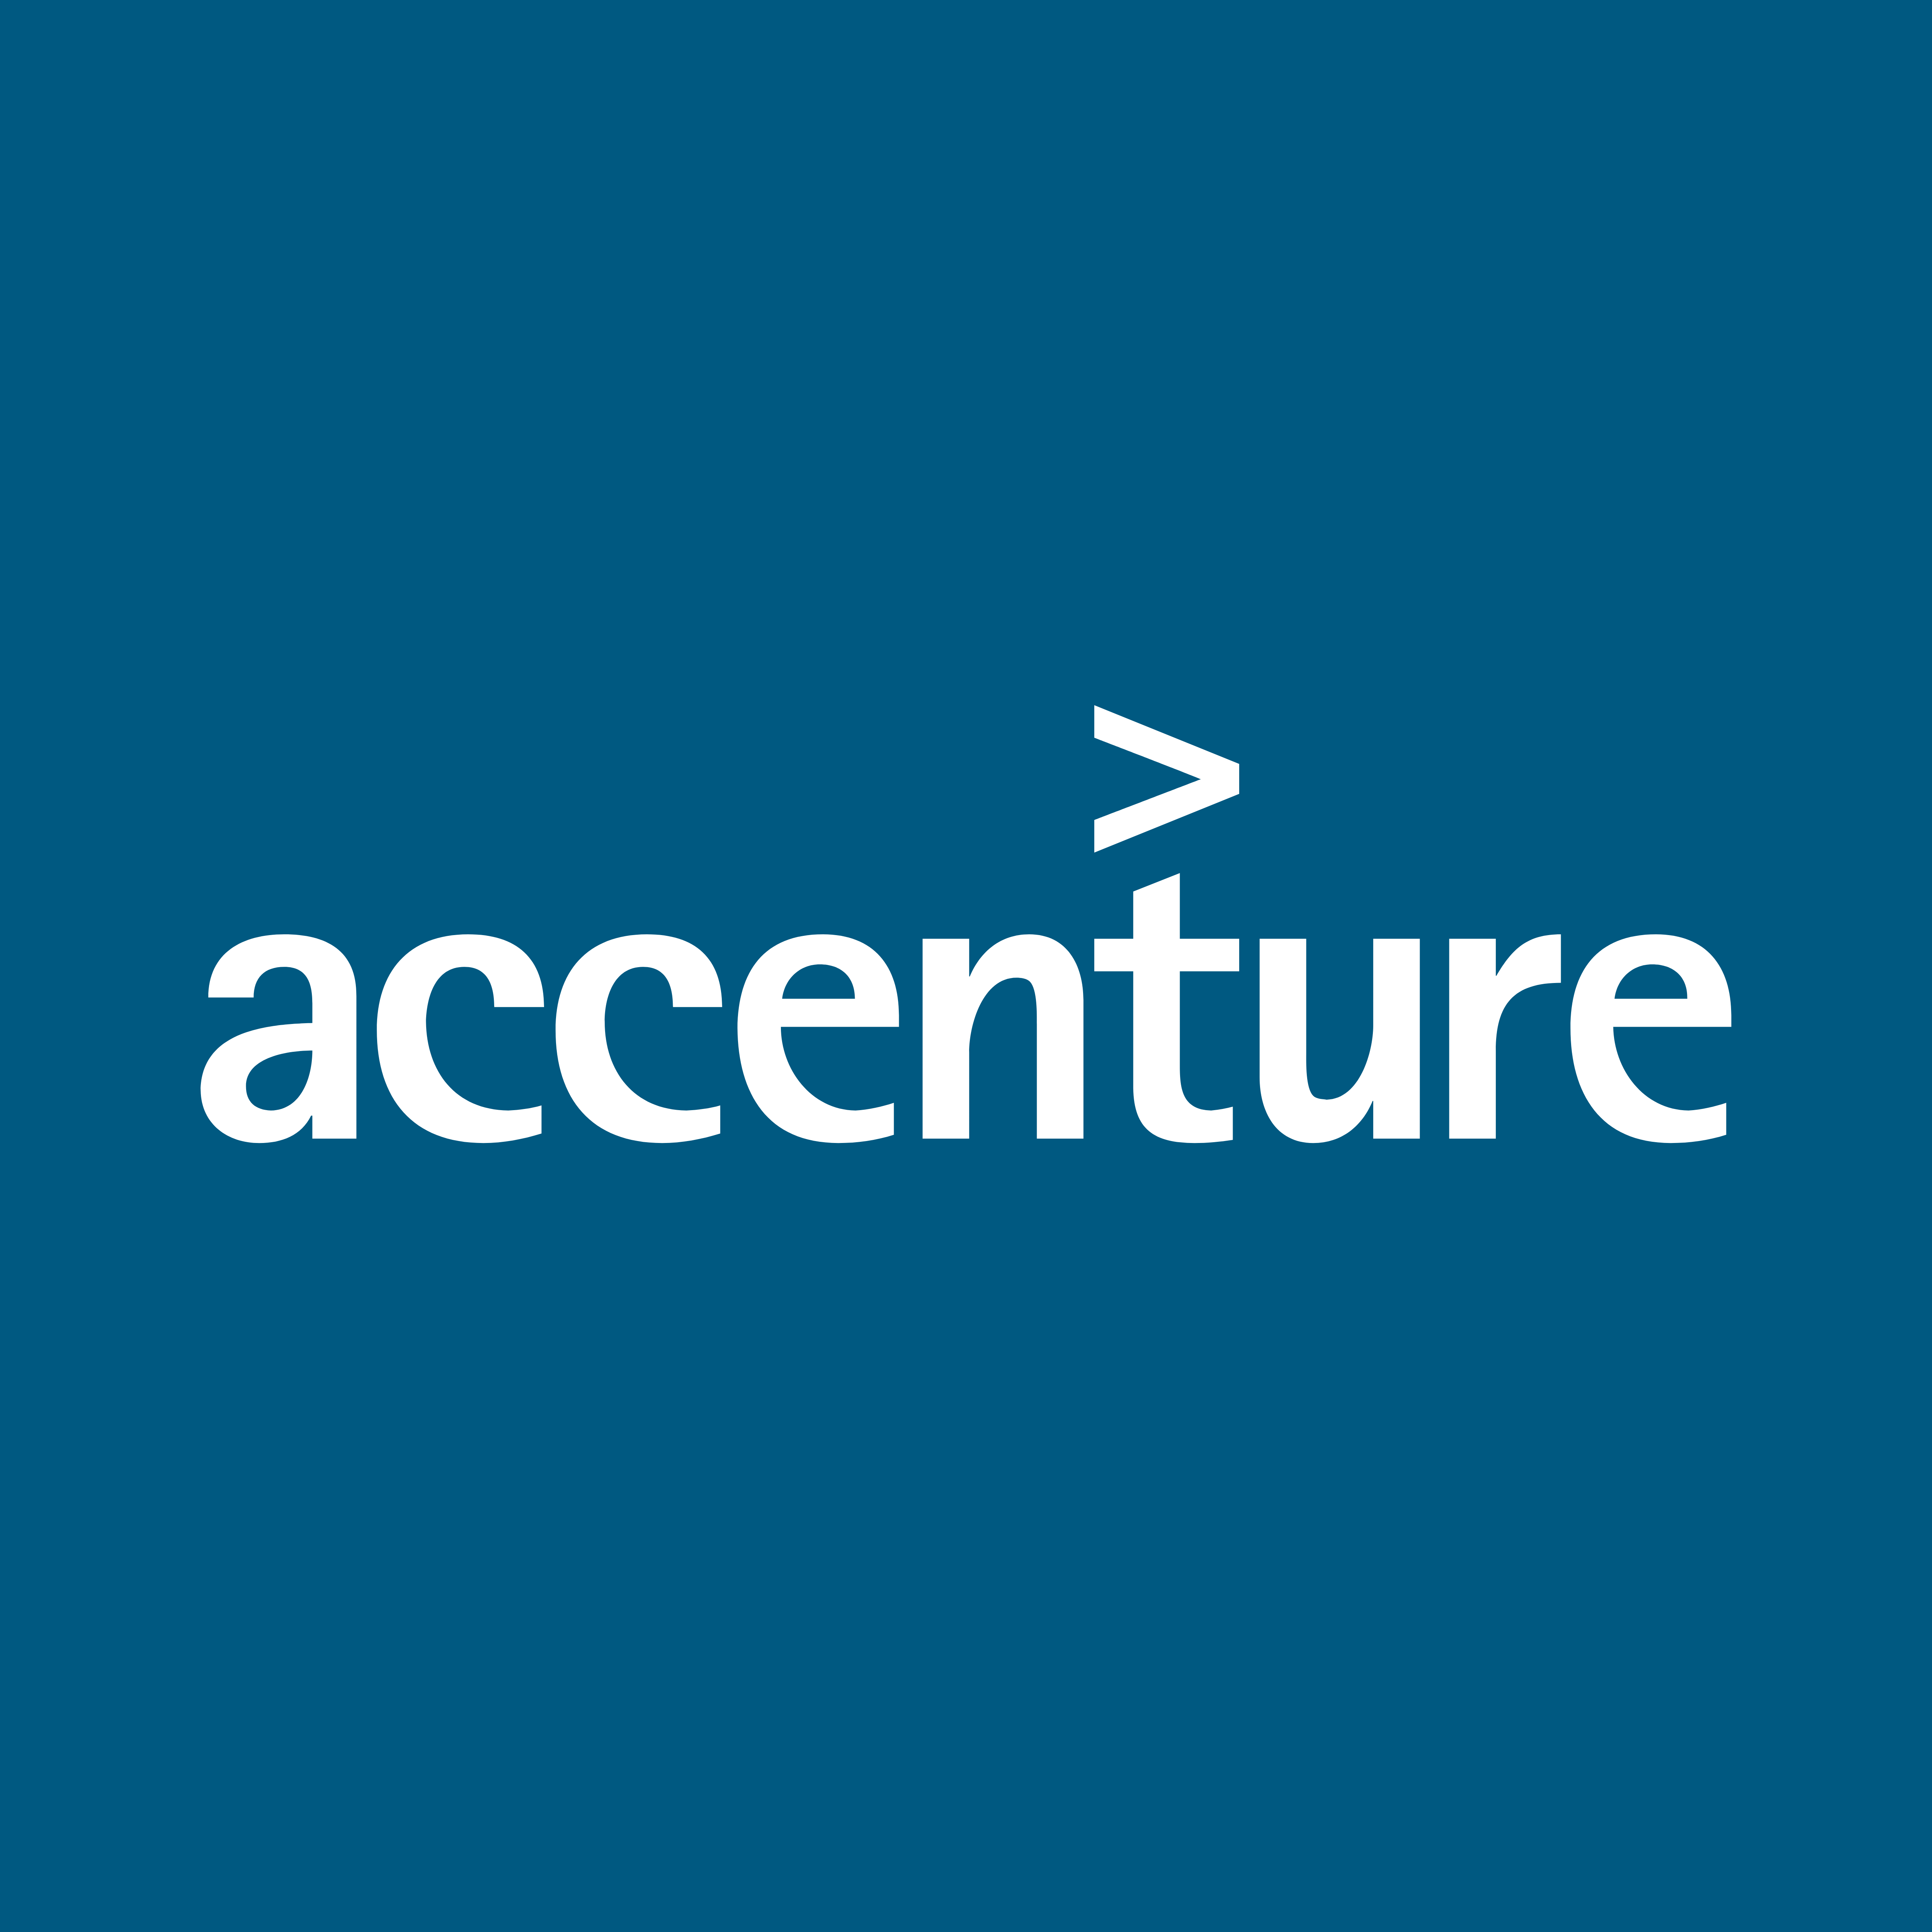 Accenture Logo Desktop Wallpaper